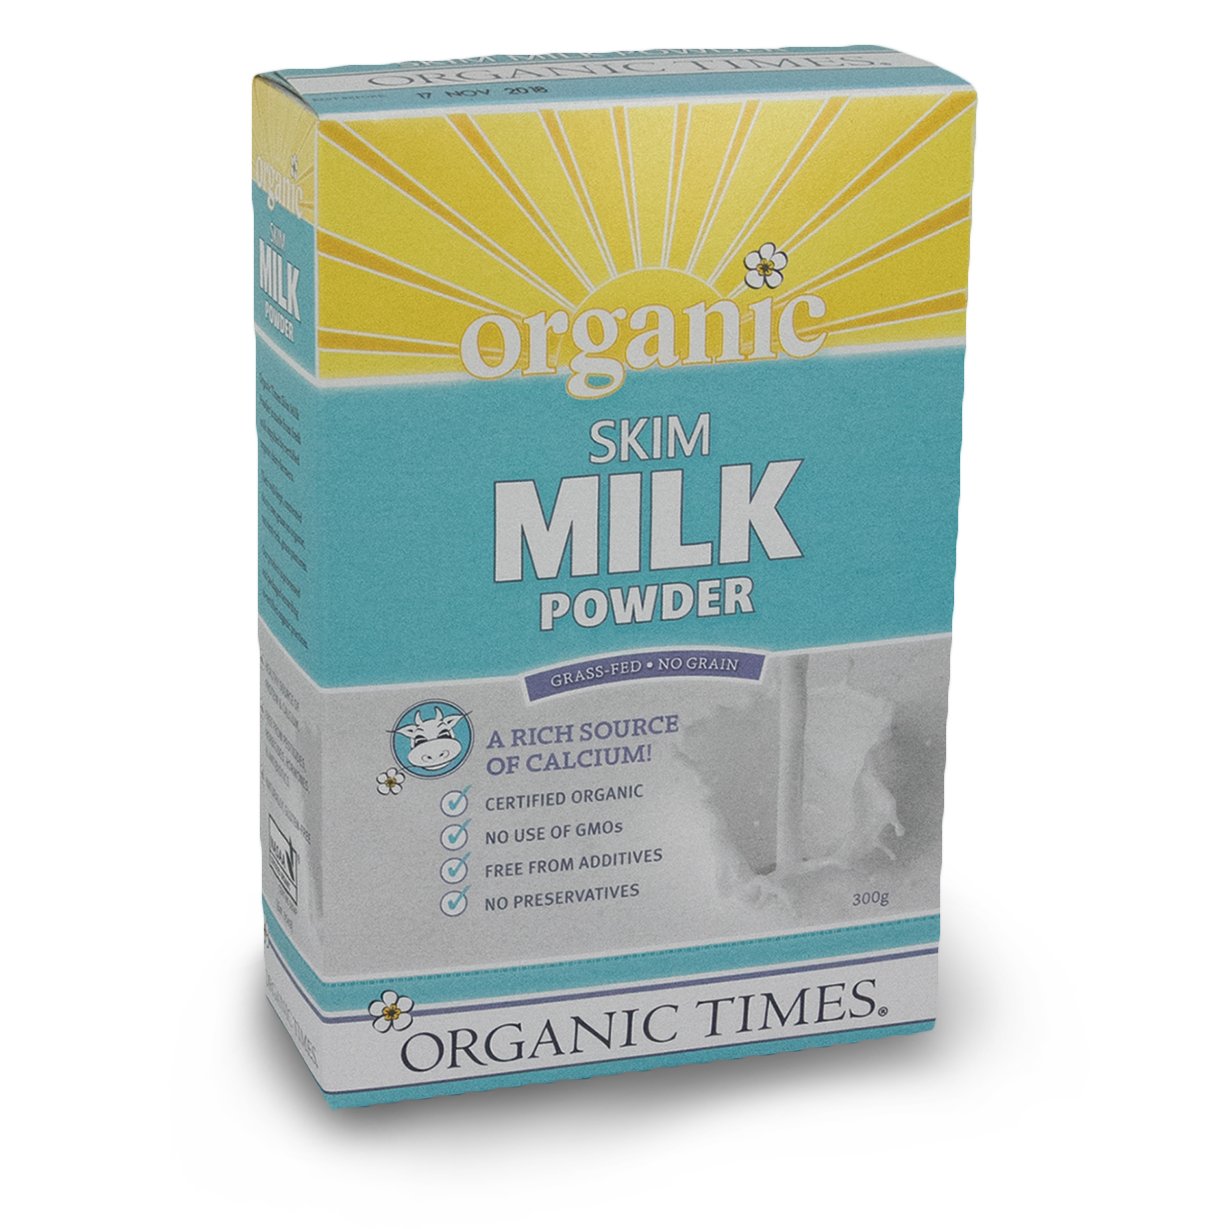 Organic Times Skim Milk Powder 300g-The Living Co.